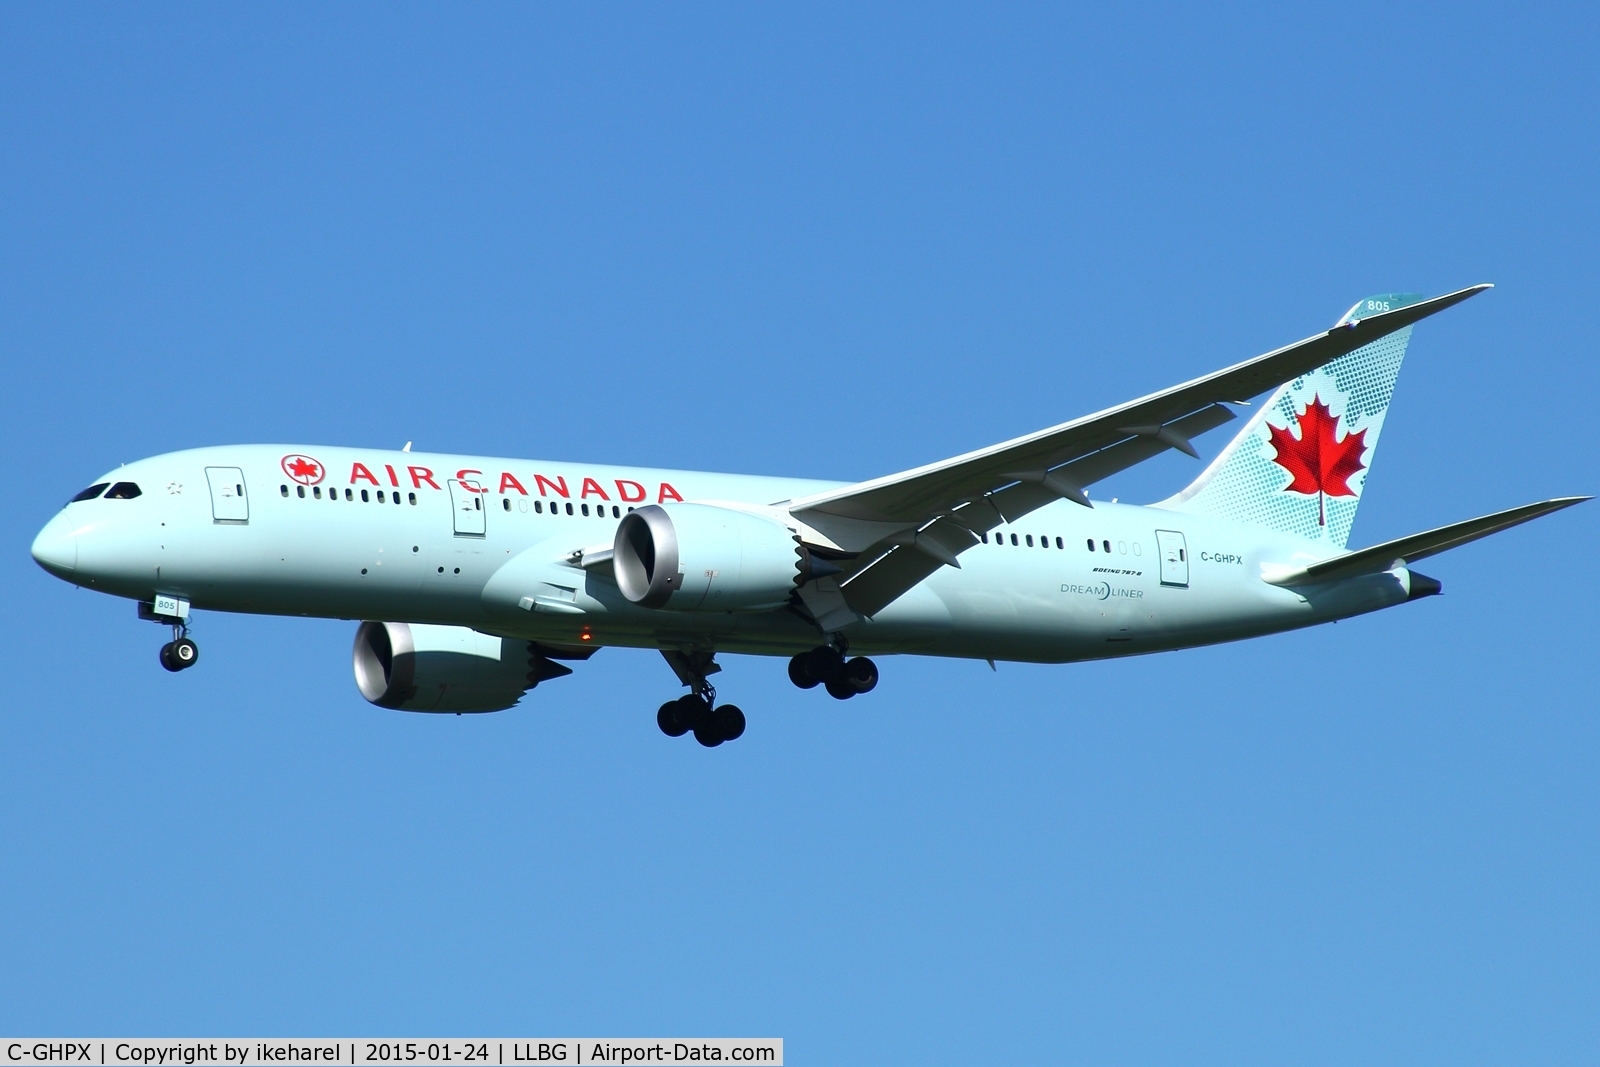 C-GHPX, 2014 Boeing 787-8 Dreamliner C/N 35261, Fly in from Toronto Canada, landing on runway 21.